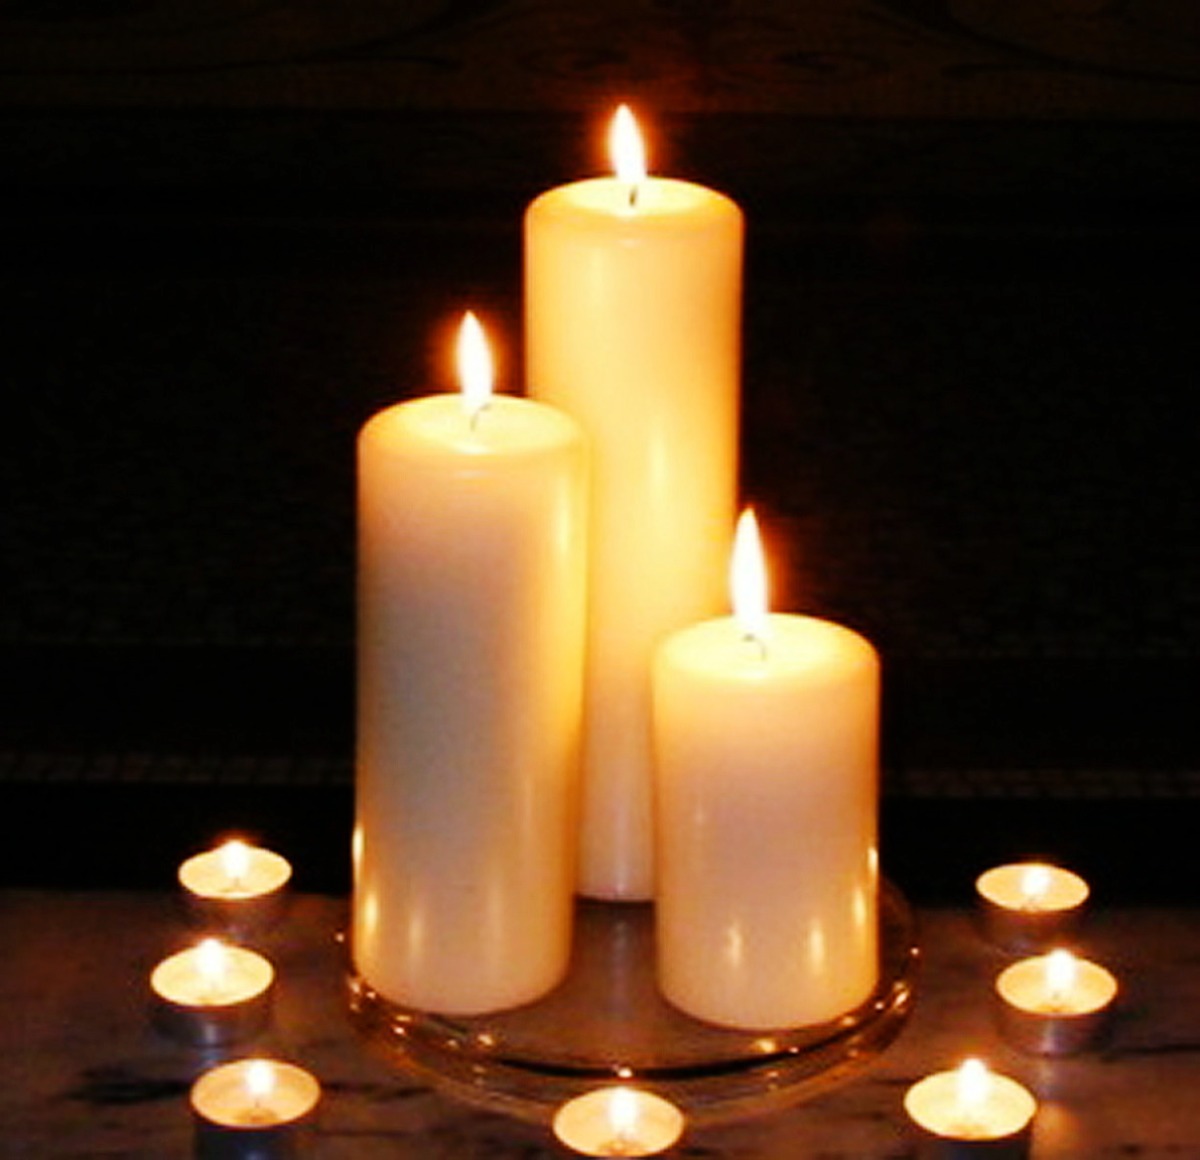 trio-de-velas-decorativas-aluzza_MLM-F-2603273527_042012